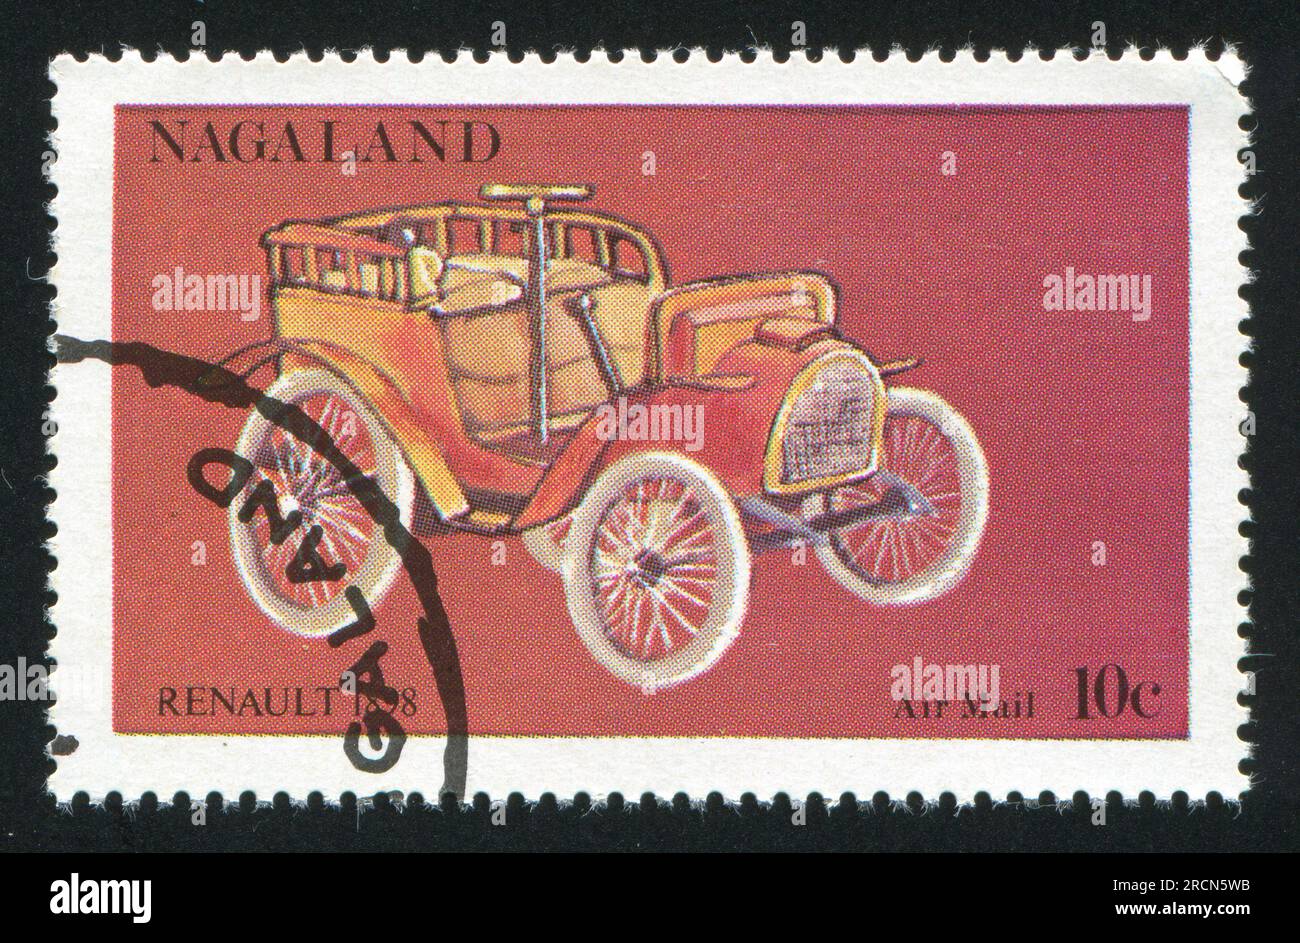 NAGALAND - CA. 1969: Stempel gedruckt von Nagaland, zeigt Renault, ca. 1969 Stockfoto